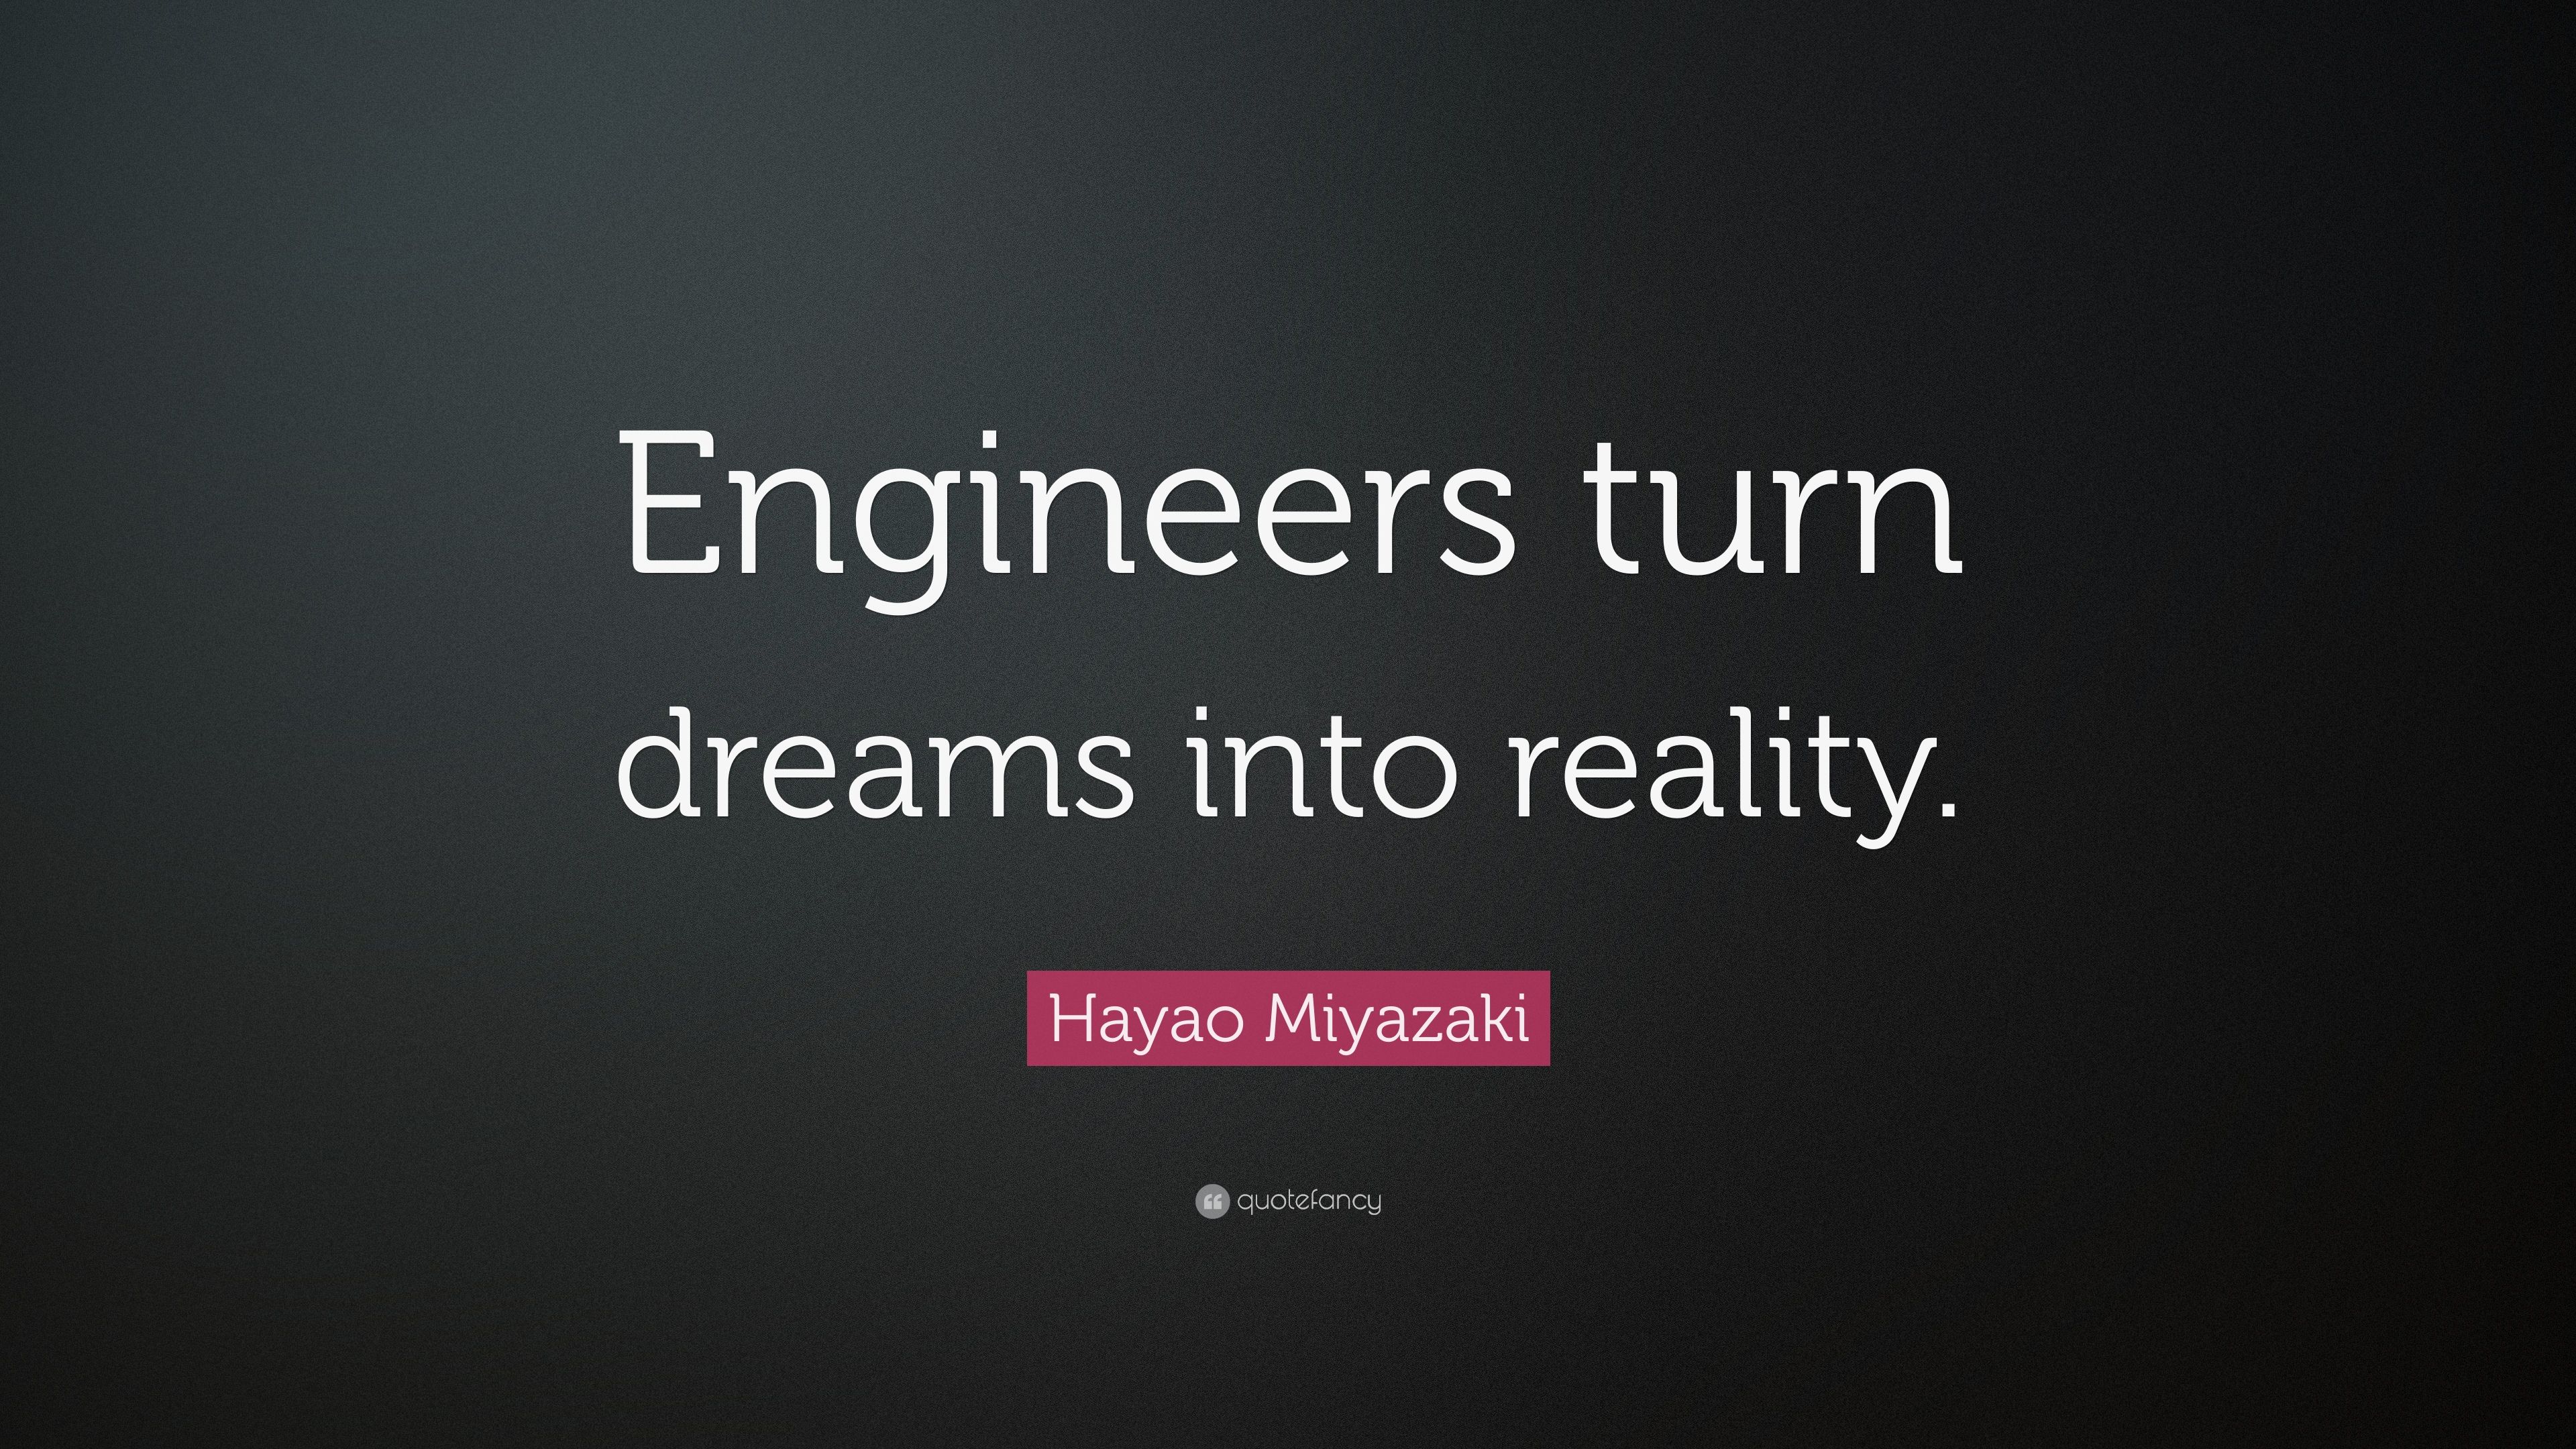 Hayao Miyazaki Quote: “Engineers turn dreams into reality.” 12